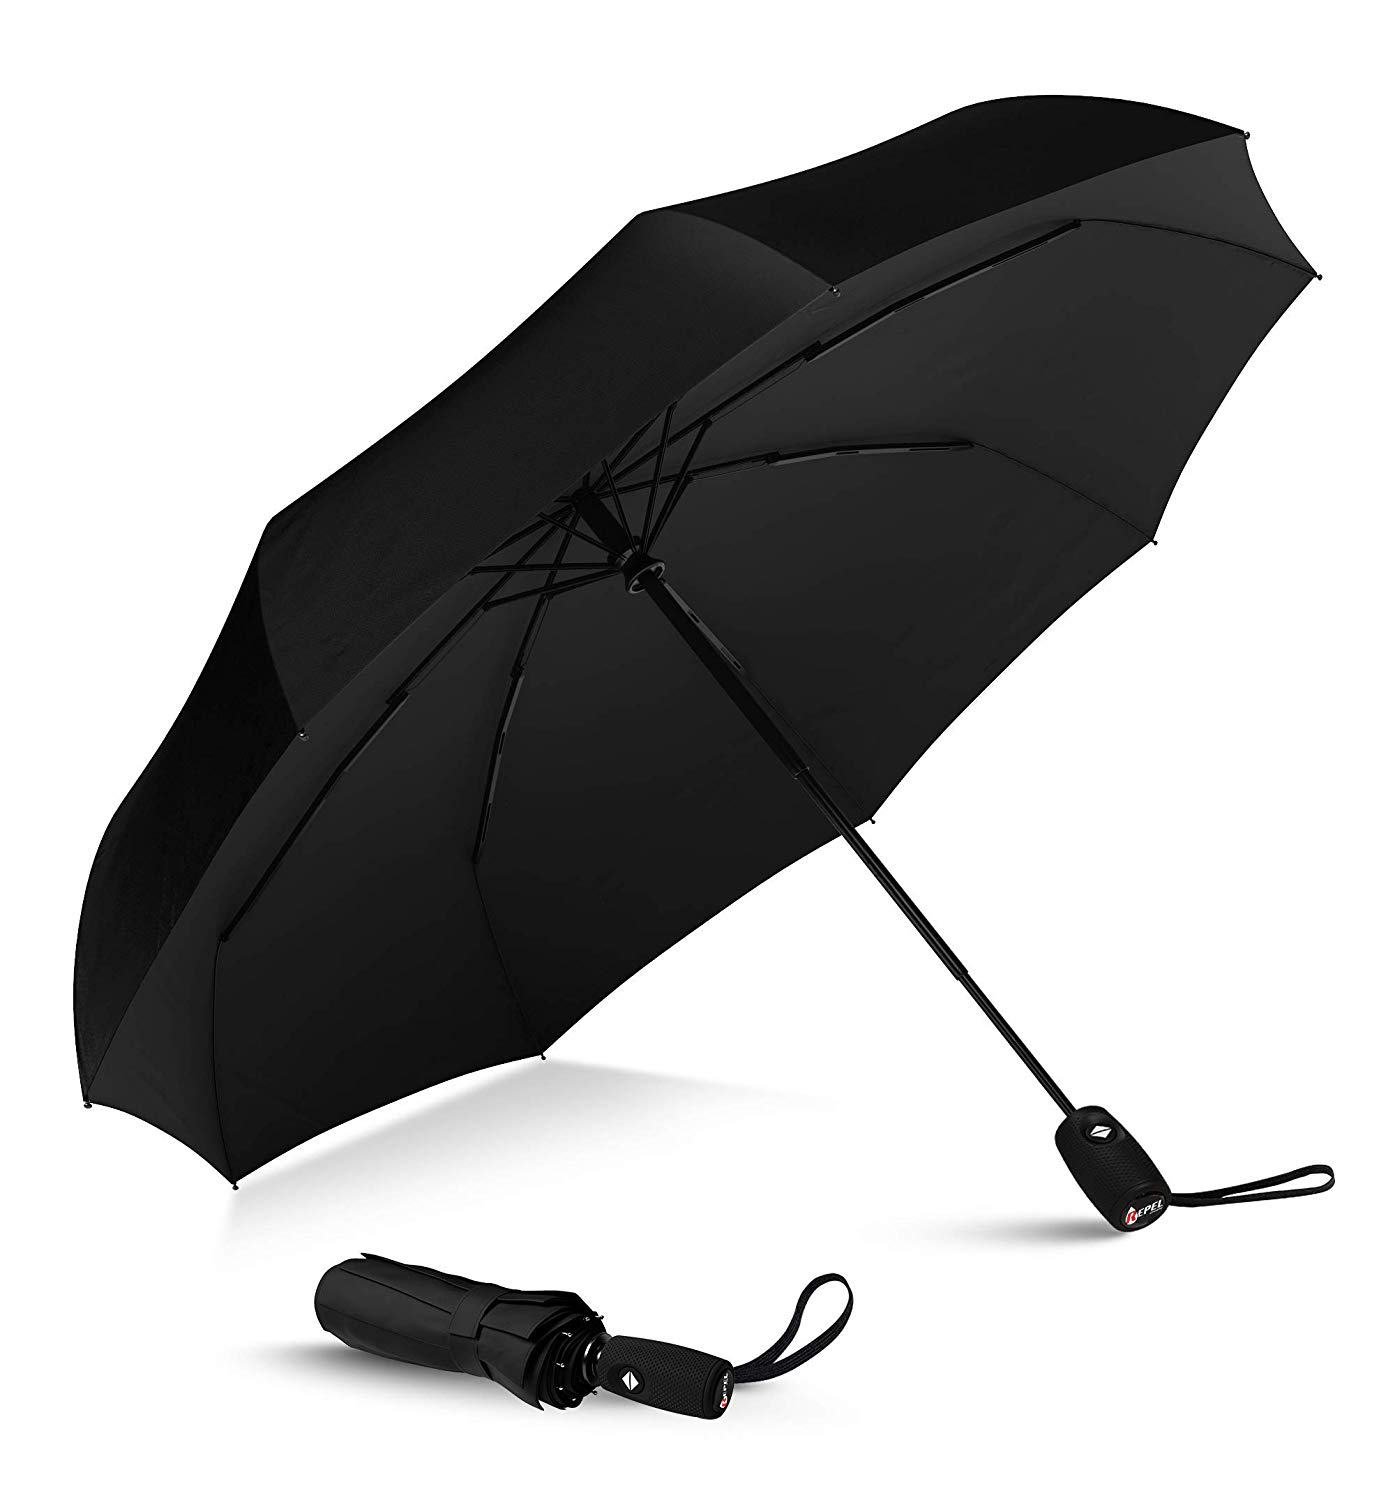 ANINILY Space Cats Umbrella Reserve Umbrella Windproof UV Protection for Rain Car Travel Outdoor Men Women 